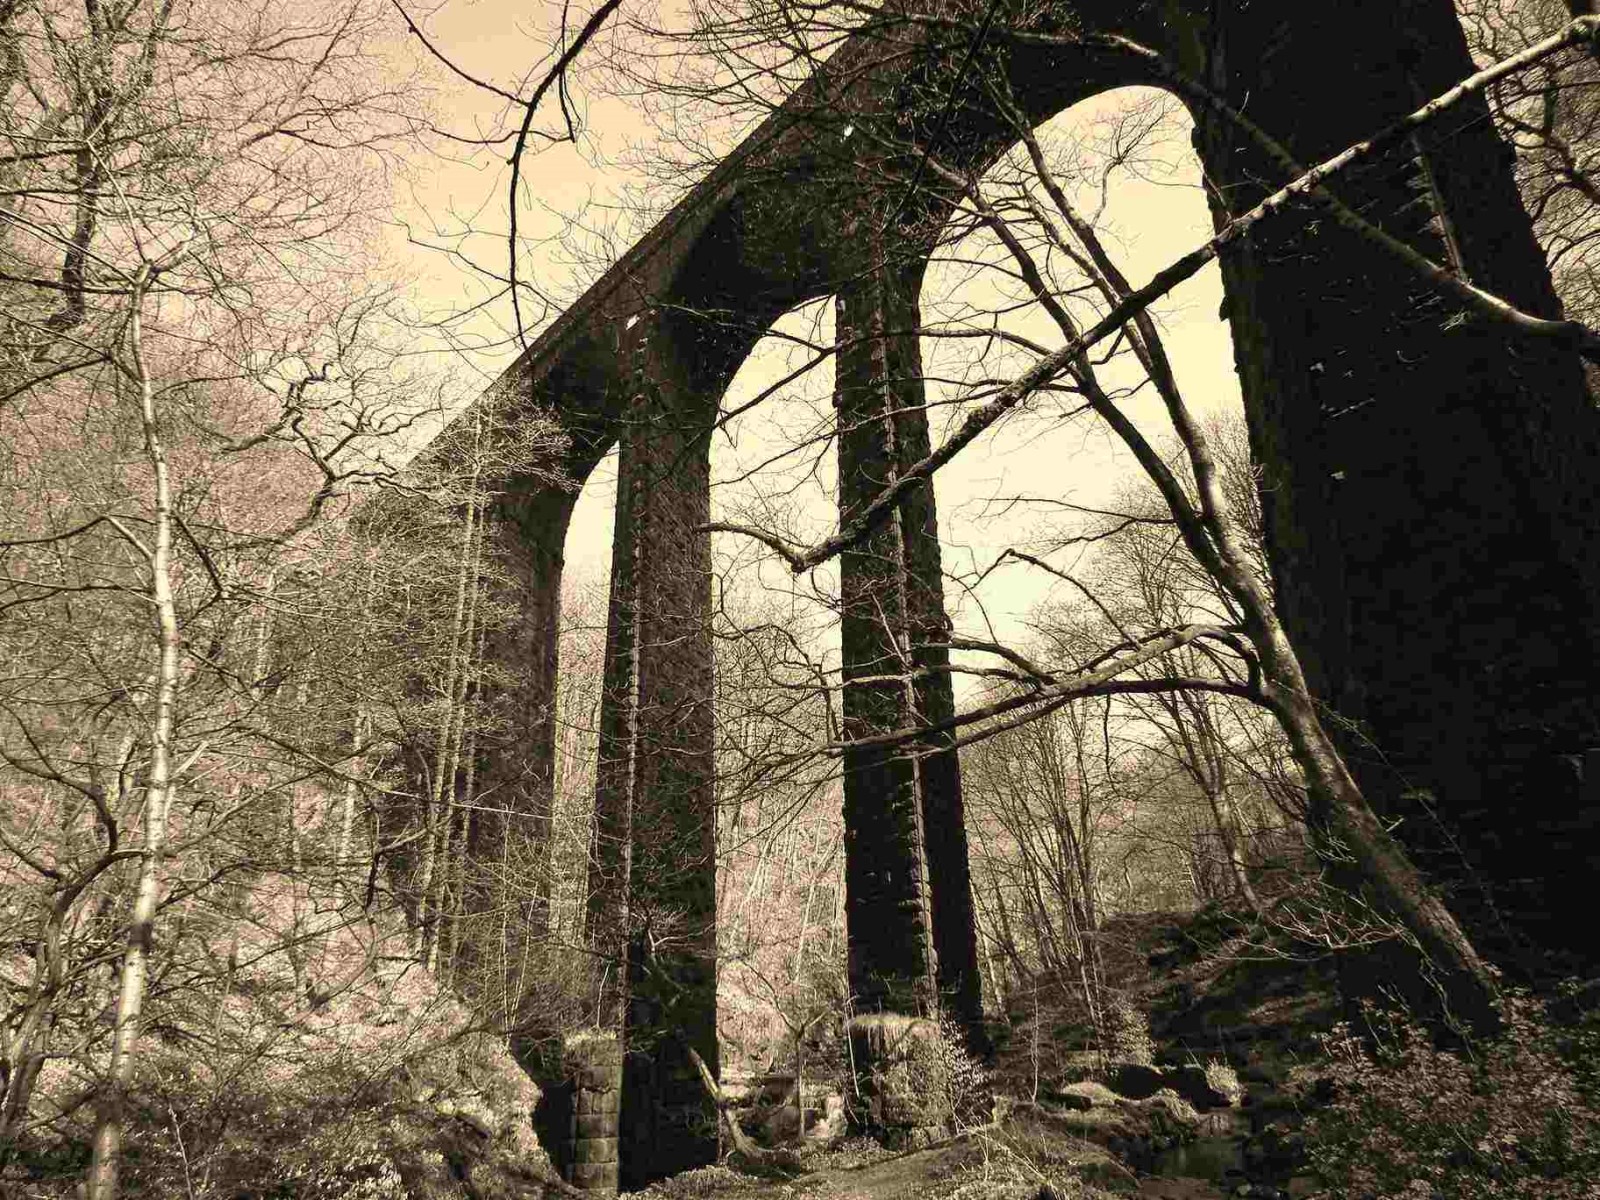 Healey Dell Viaduct
, Architecture | Manchester | History | Bridge